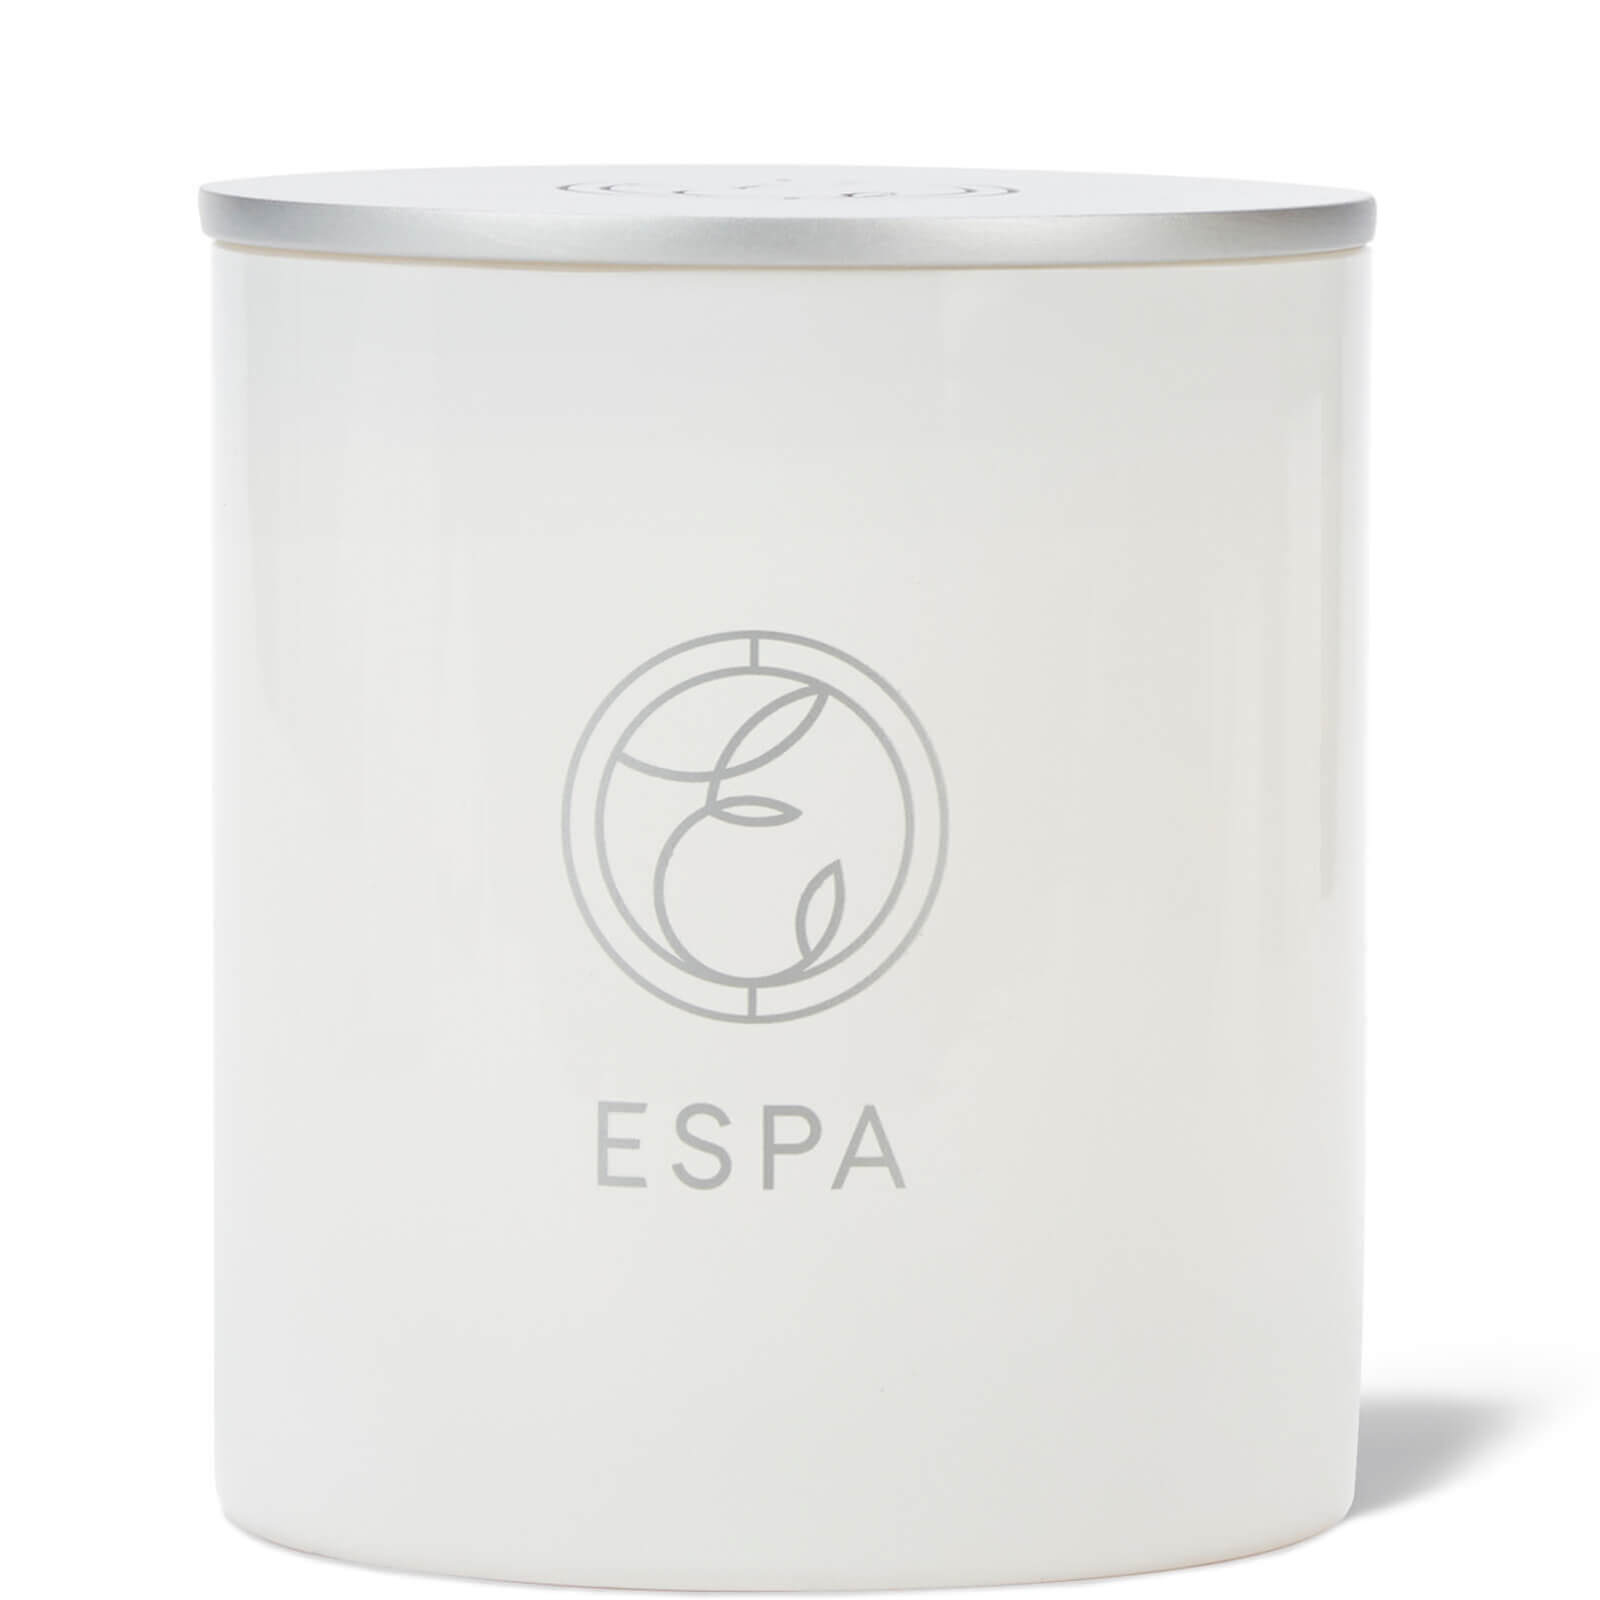 ESPA Positivity Candle Supersize 410g